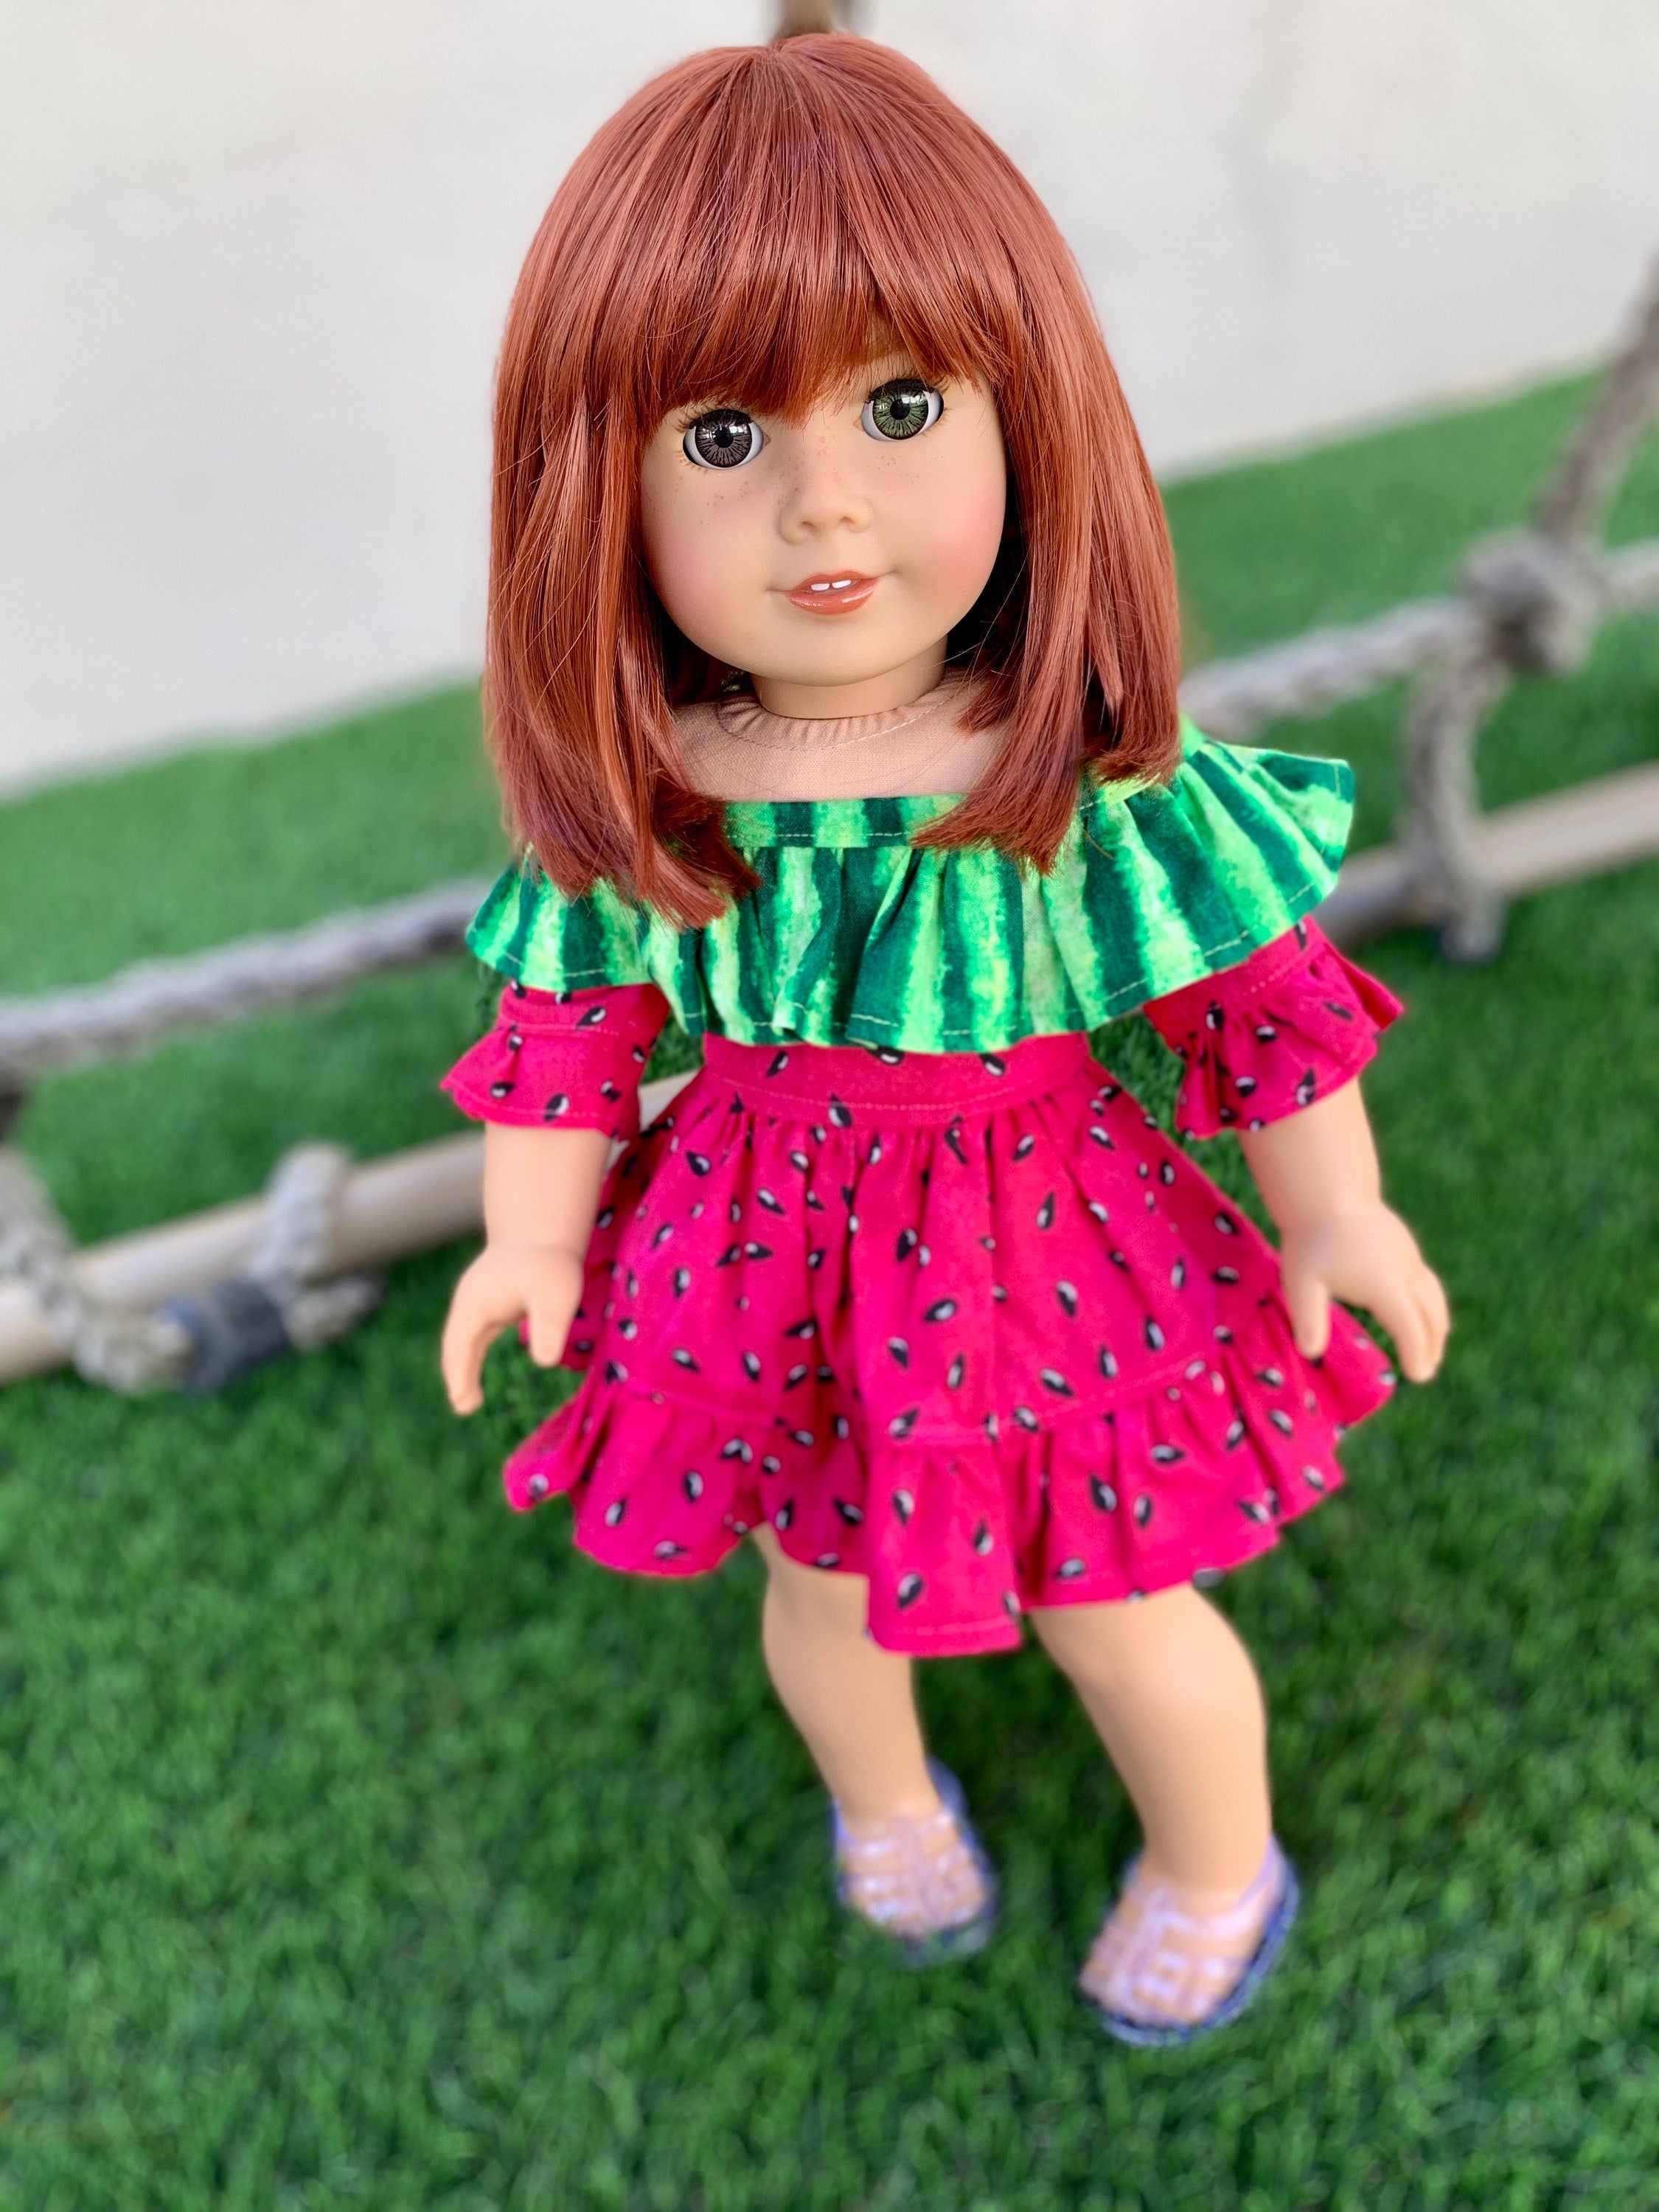 Custom doll wig for 18" American Girl Dolls -Heat & Tangle Resistant - fits 10-11" size of 18" dolls OG Blythe BJD Gotz dark Red bangs